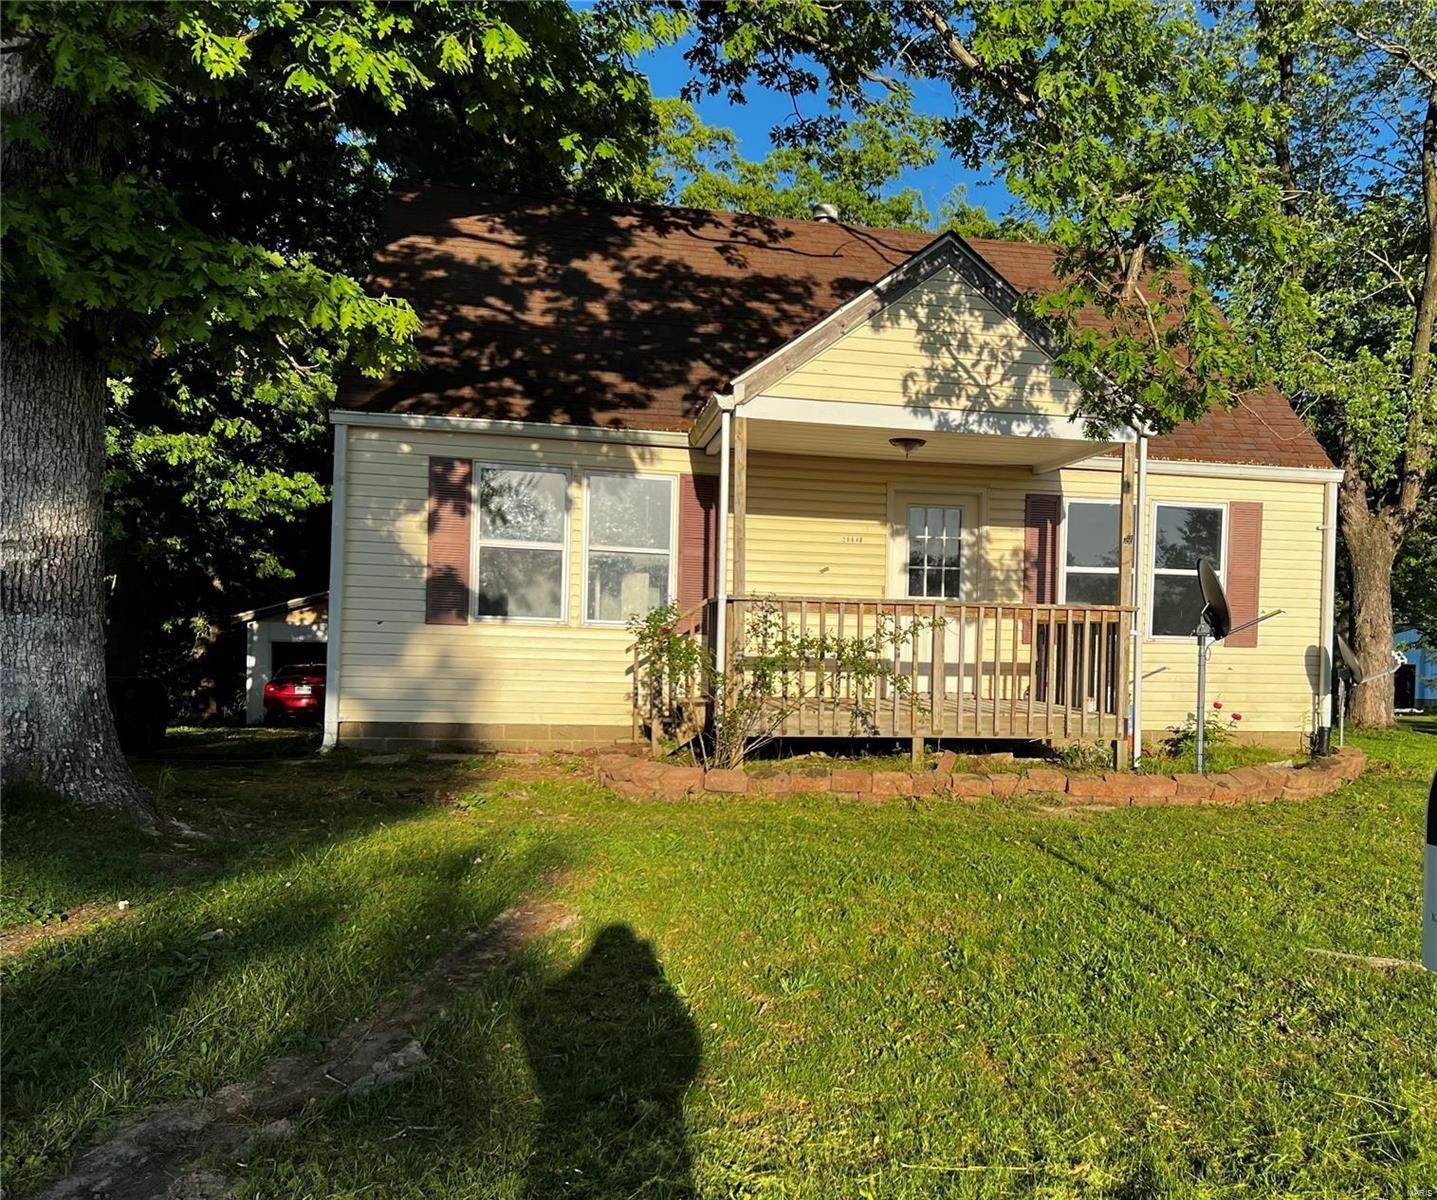 Property for Sale at 28848 Highway B Warrenton, Missouri 63383 United States